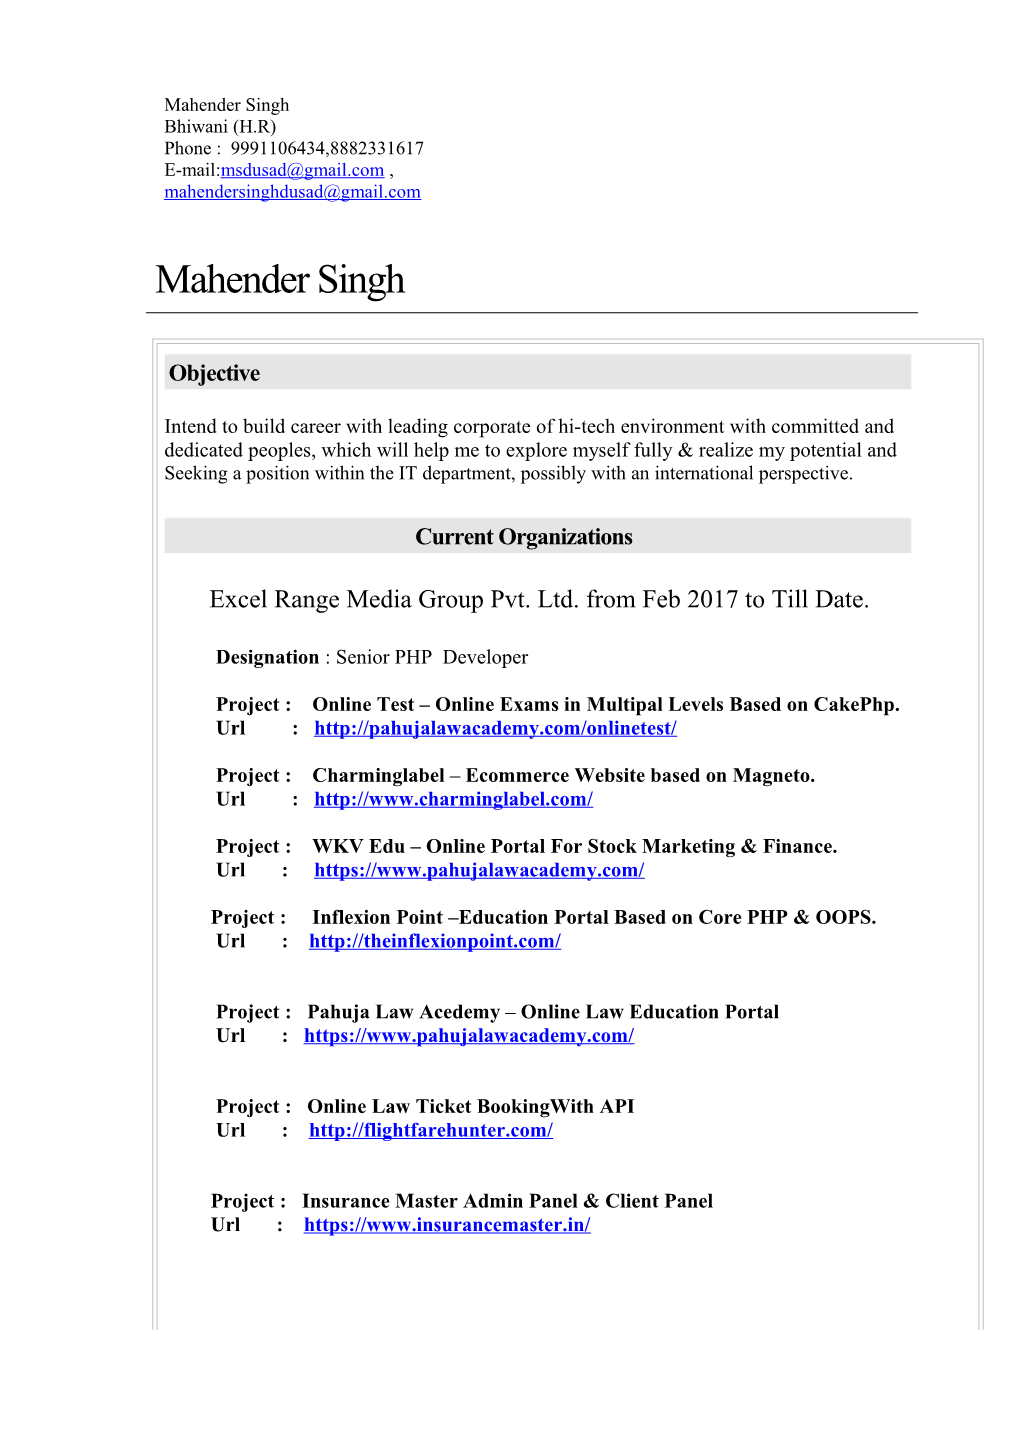 Mahender Singh